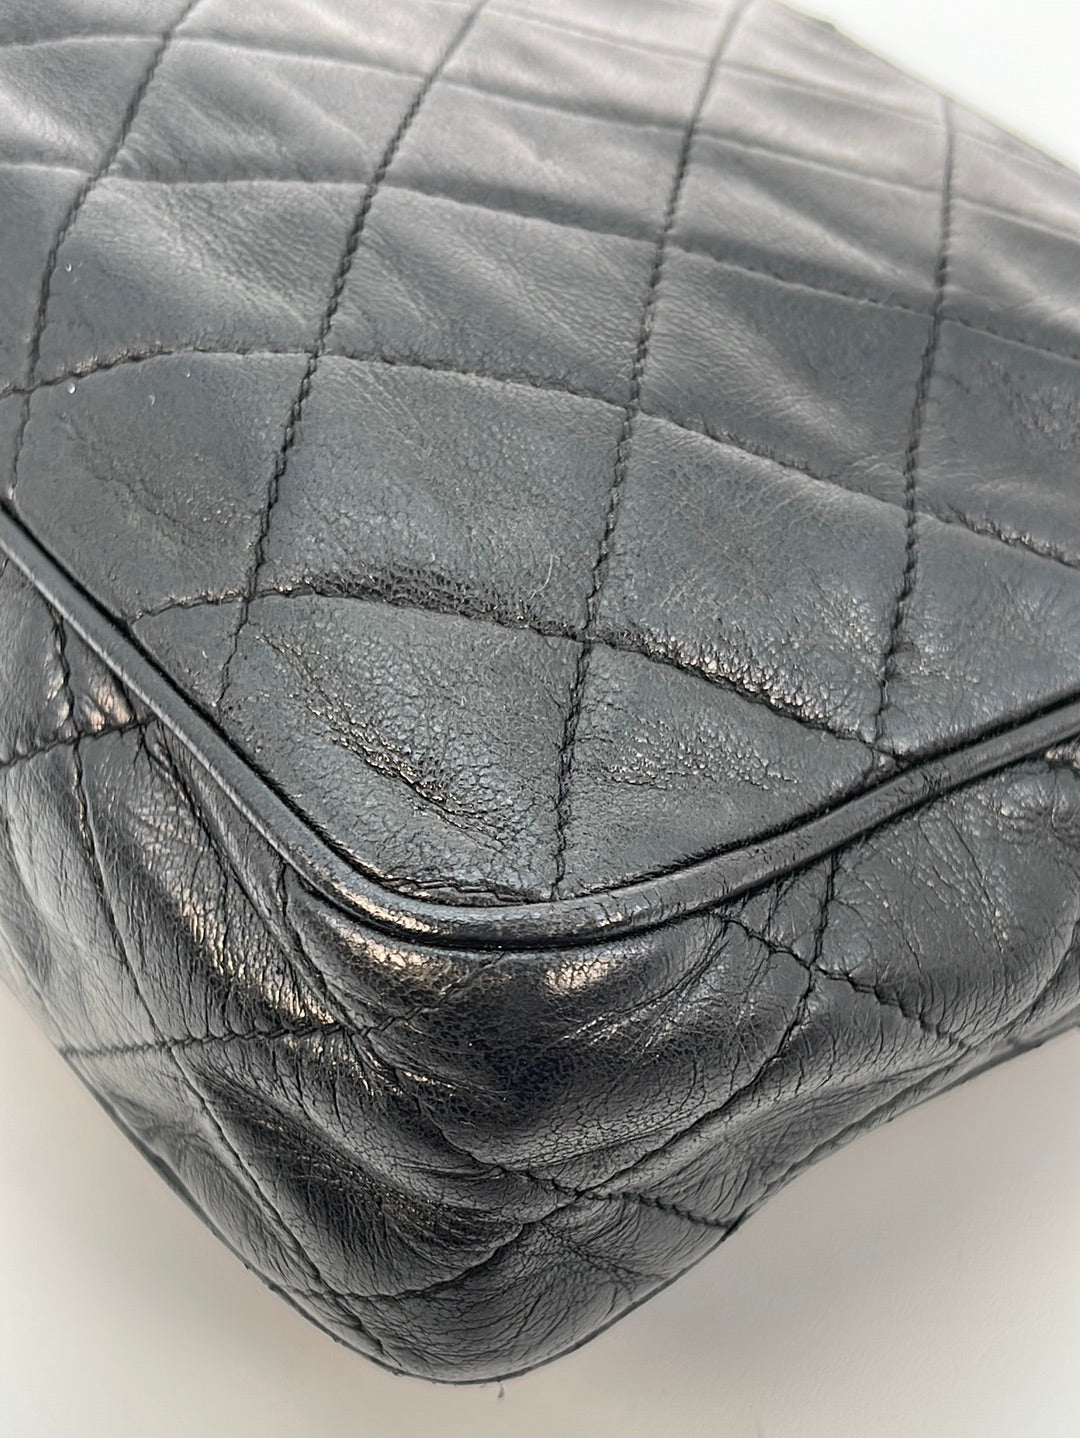 PRELOVED CHANEL Black Quilted Lambskin Tassel Chain Camara Bag 873678 033023 -$500 OFF